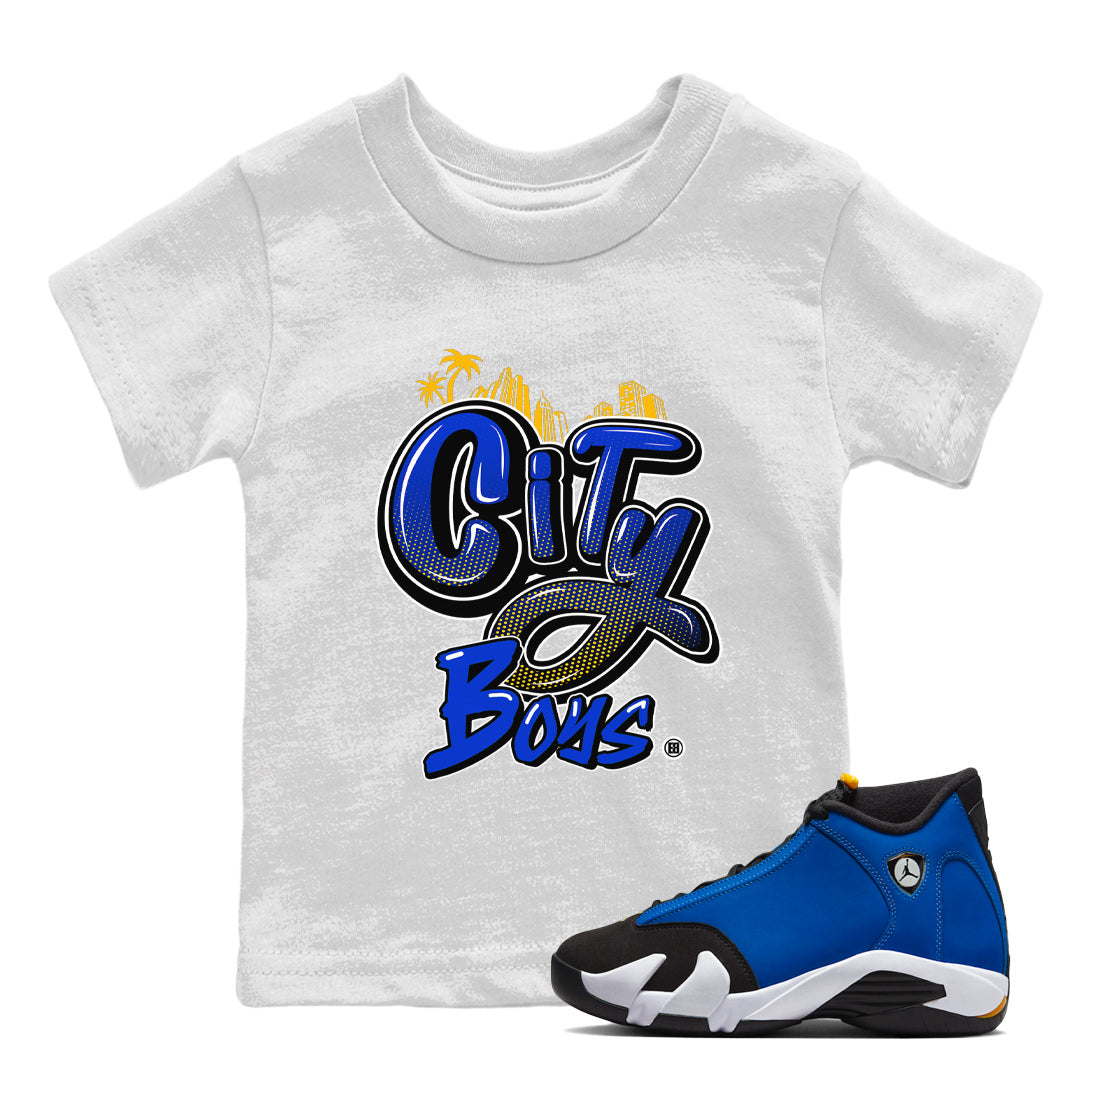 Air Jordan 14 Laney Sneaker Match Tees City Boys Sneaker Tees 14s Laney Sneaker Release Tees Kids Shirts White 1